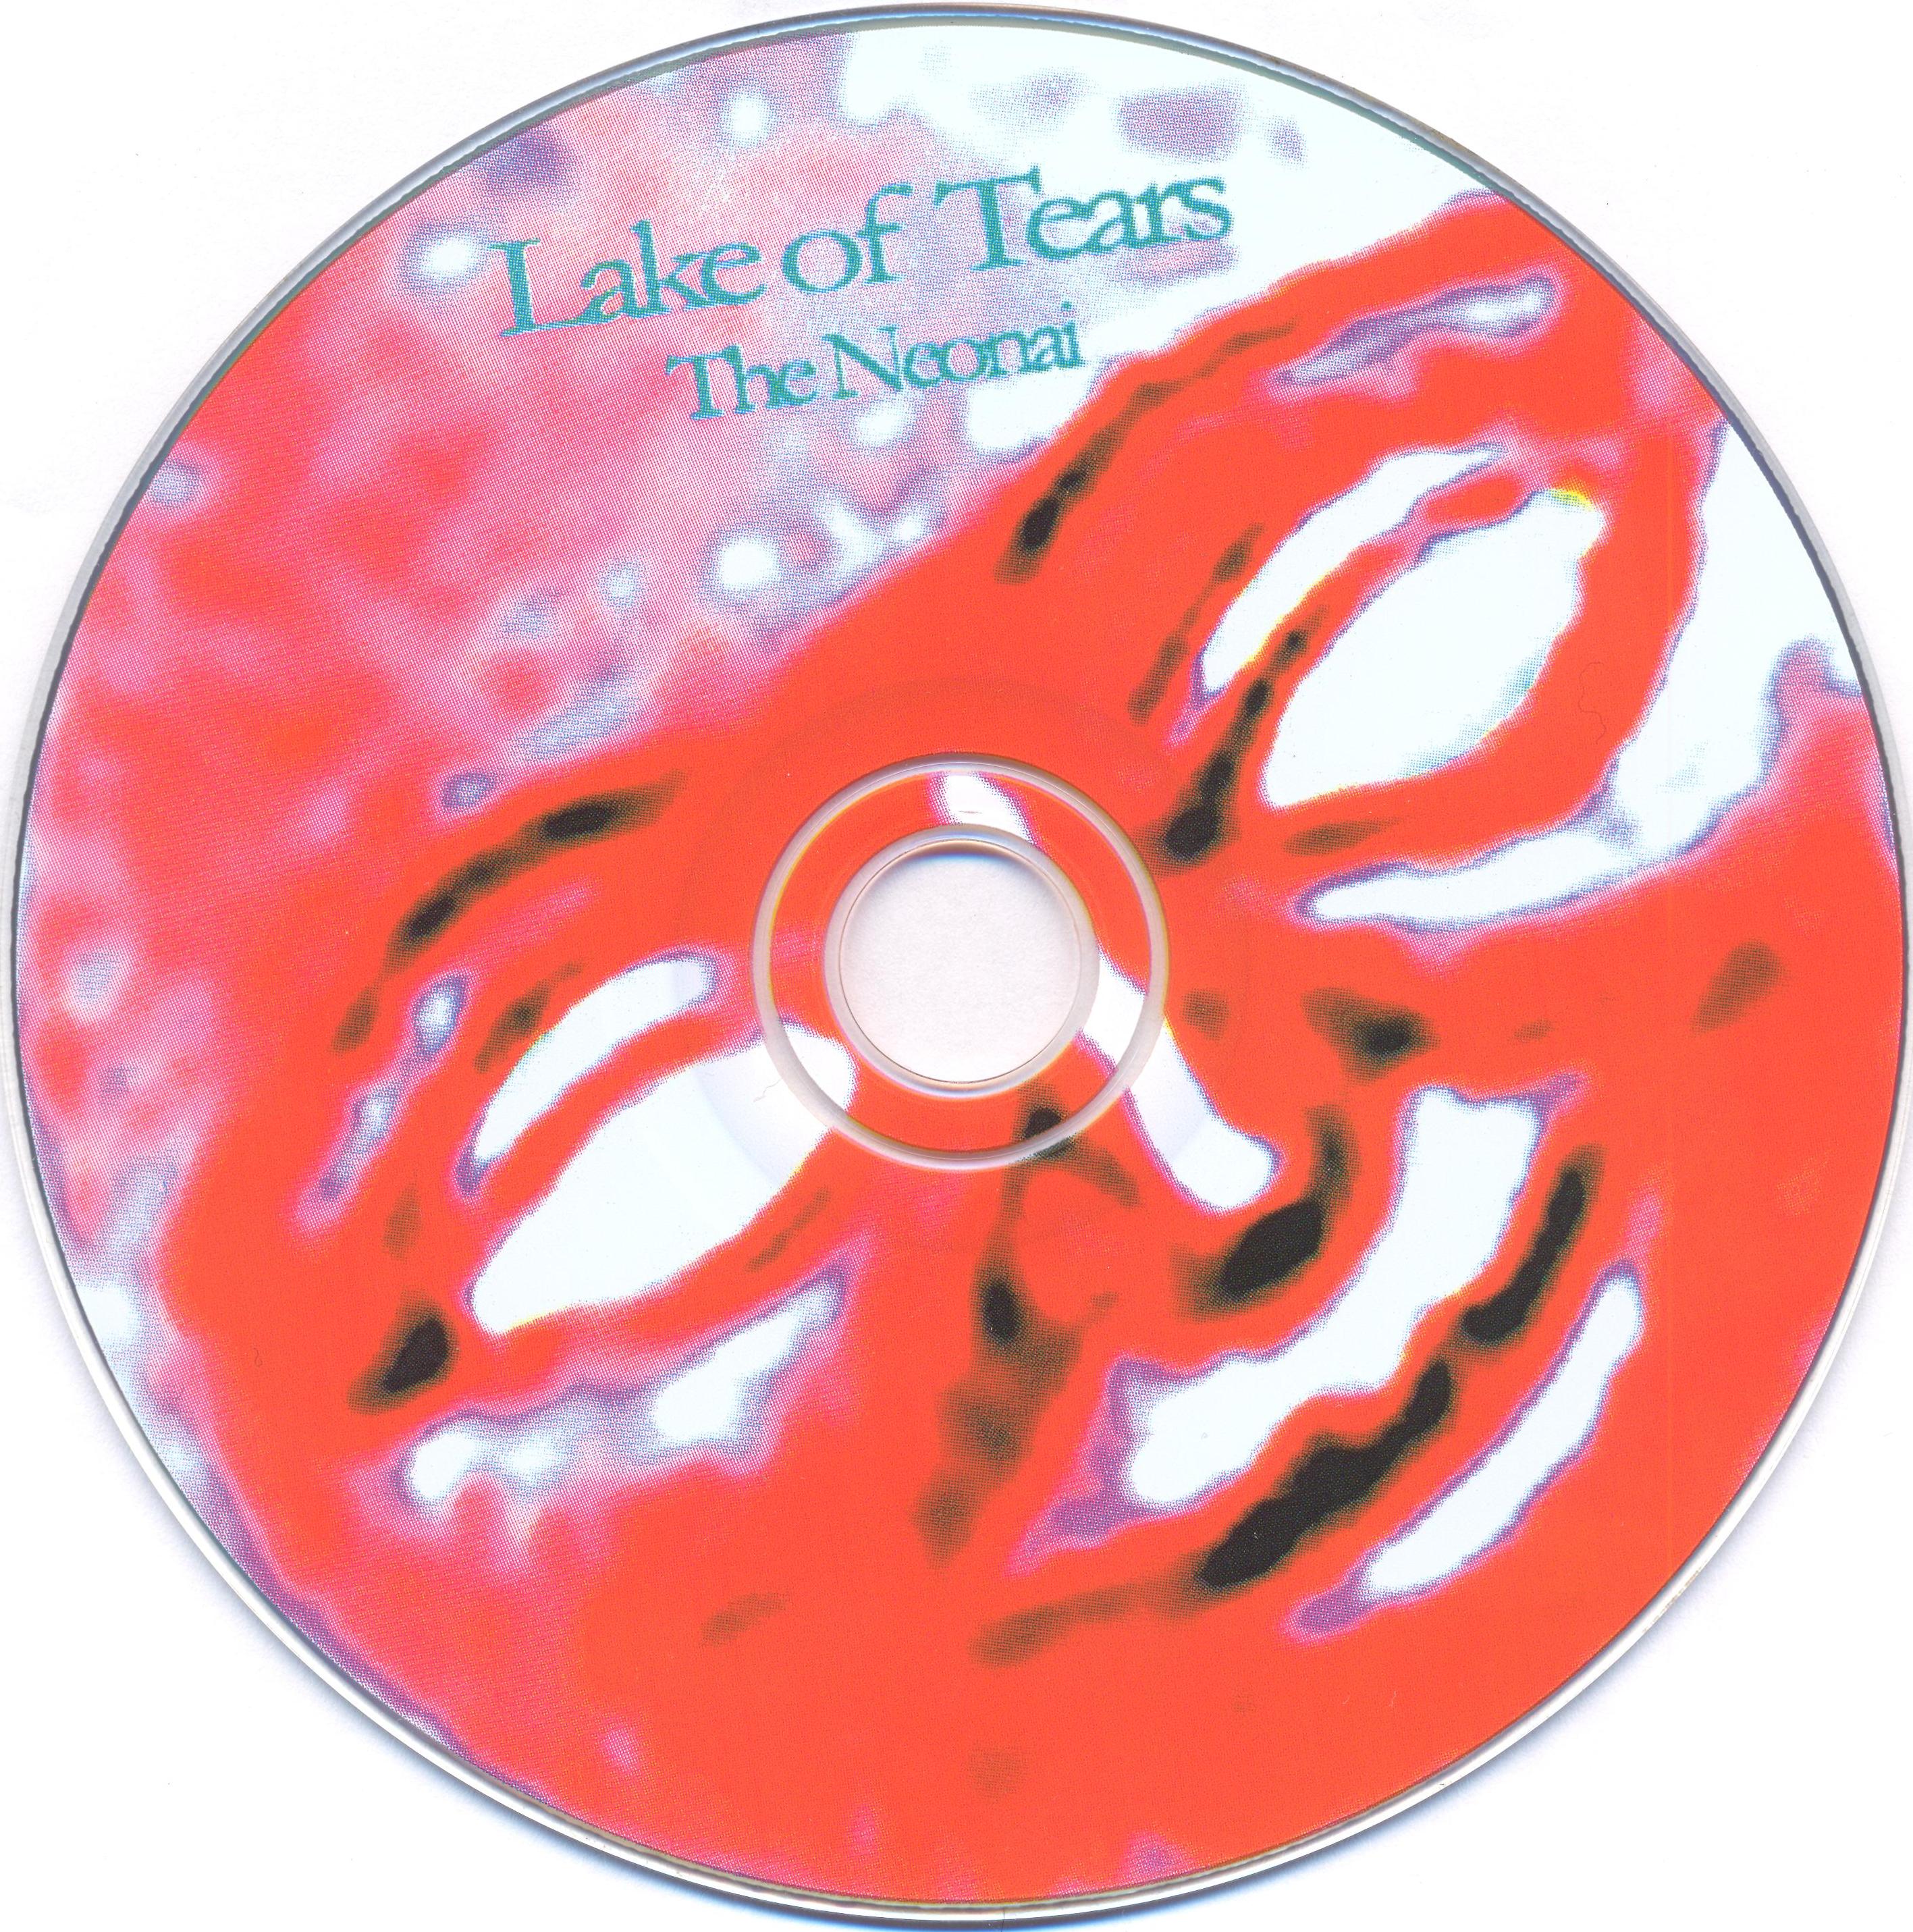 2002 Lake Of Tears - The Neonai Flac - CD.JPG